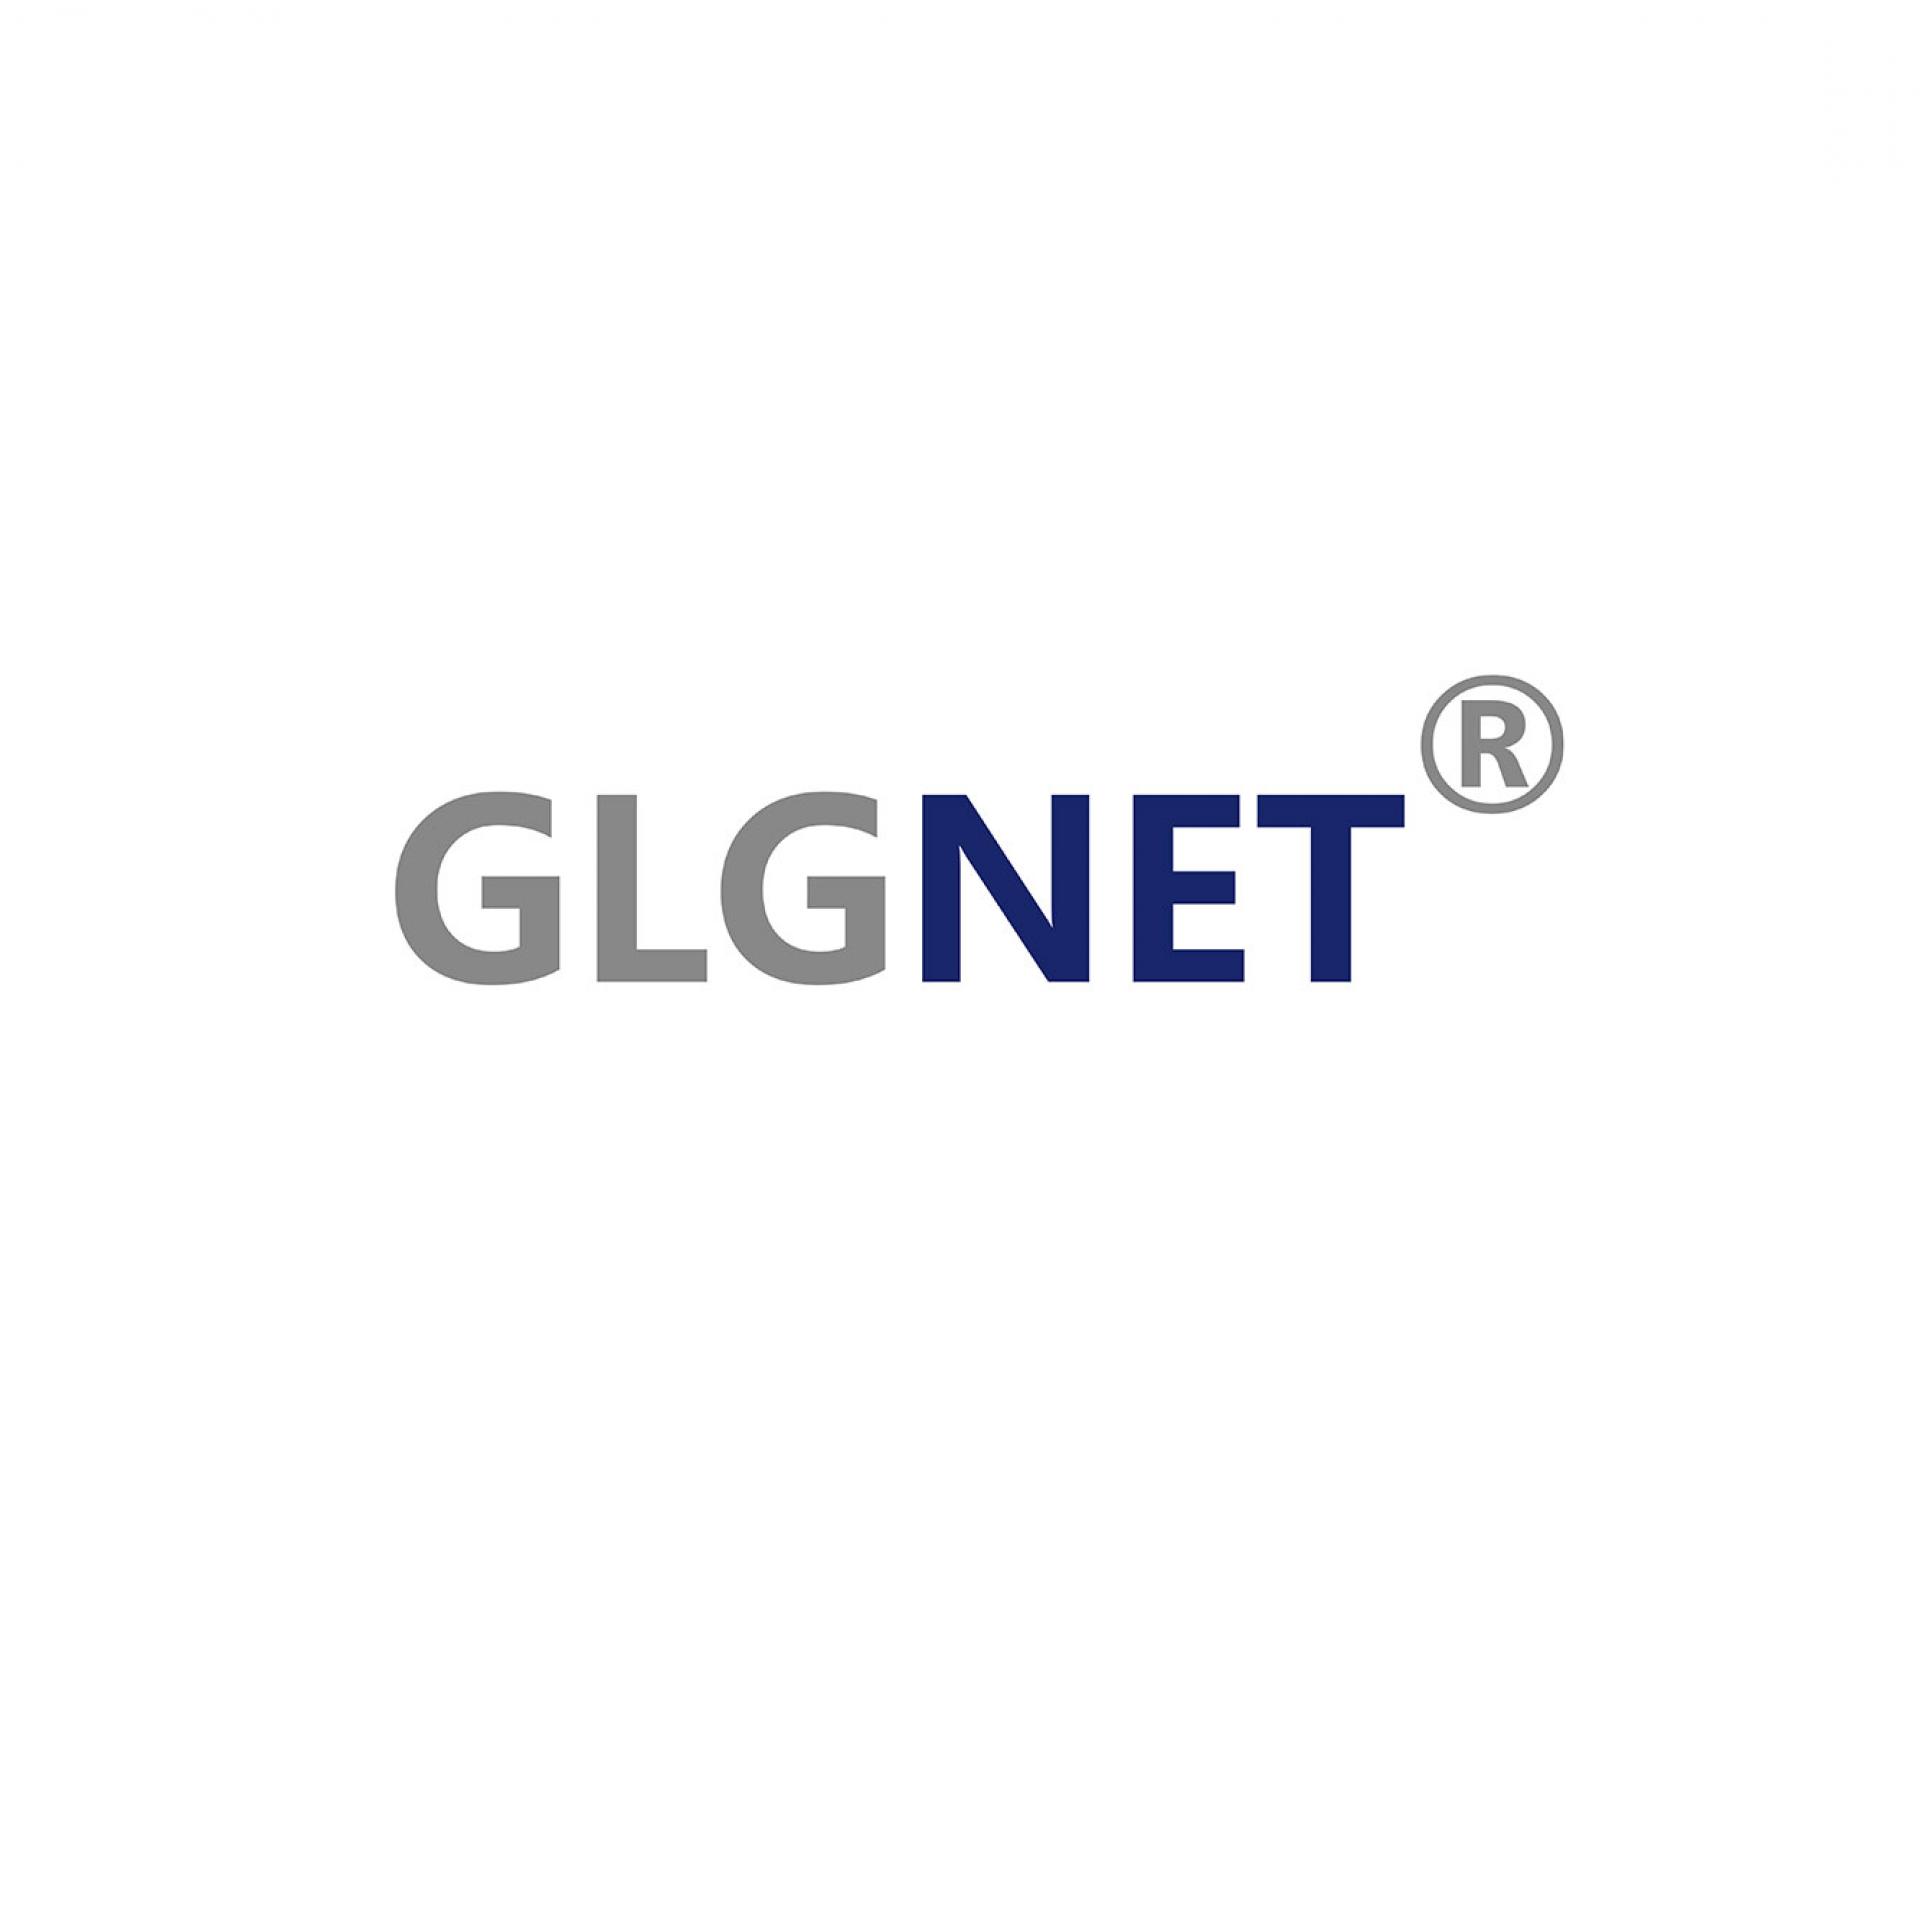 GLGNET Logo